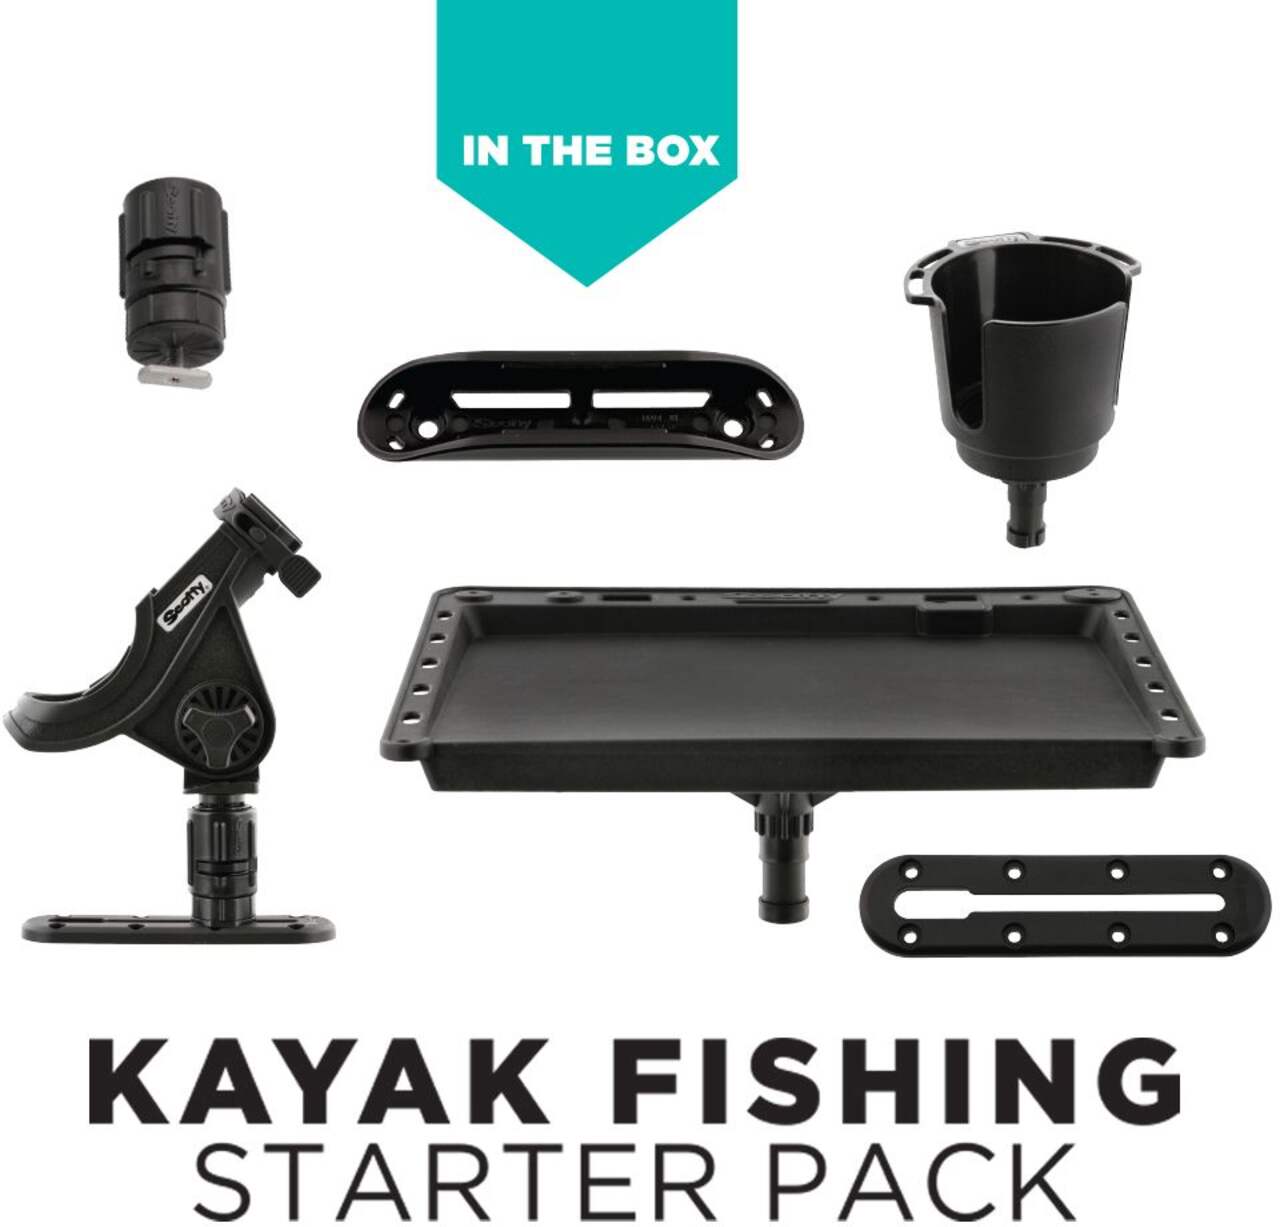 Scotty - Kayak Fishing Starter Pack